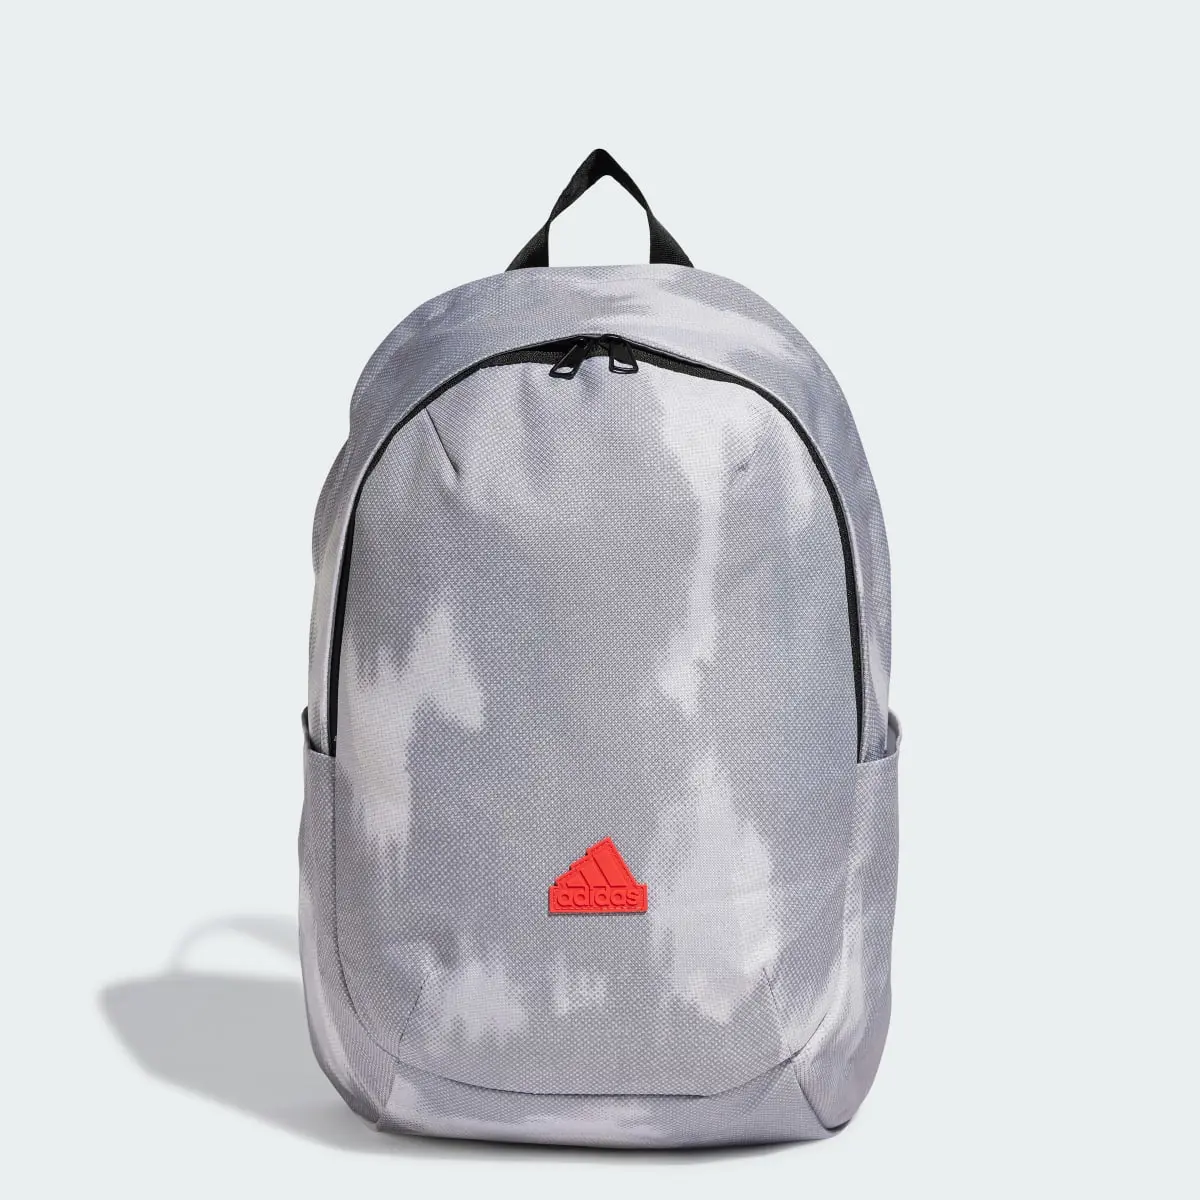 Adidas Cocoon Backpack. 1